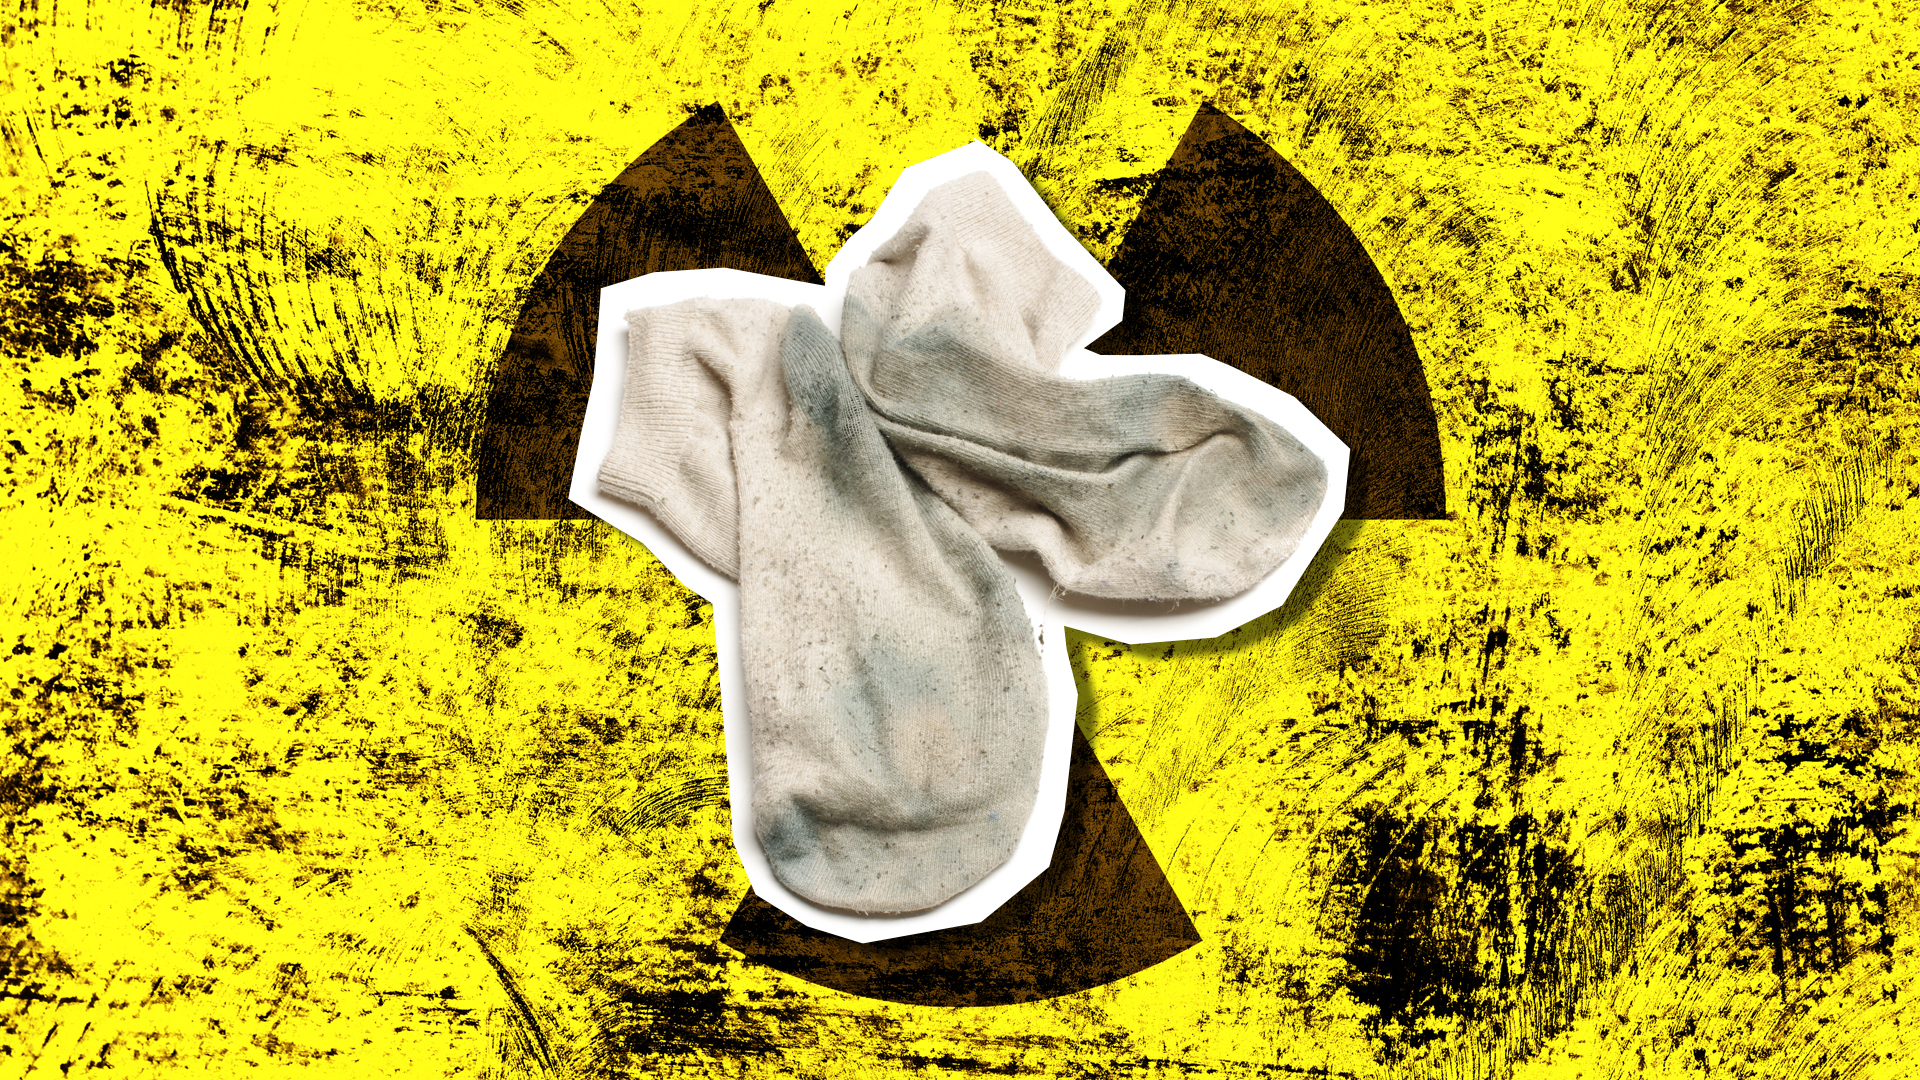 Radioactive socks